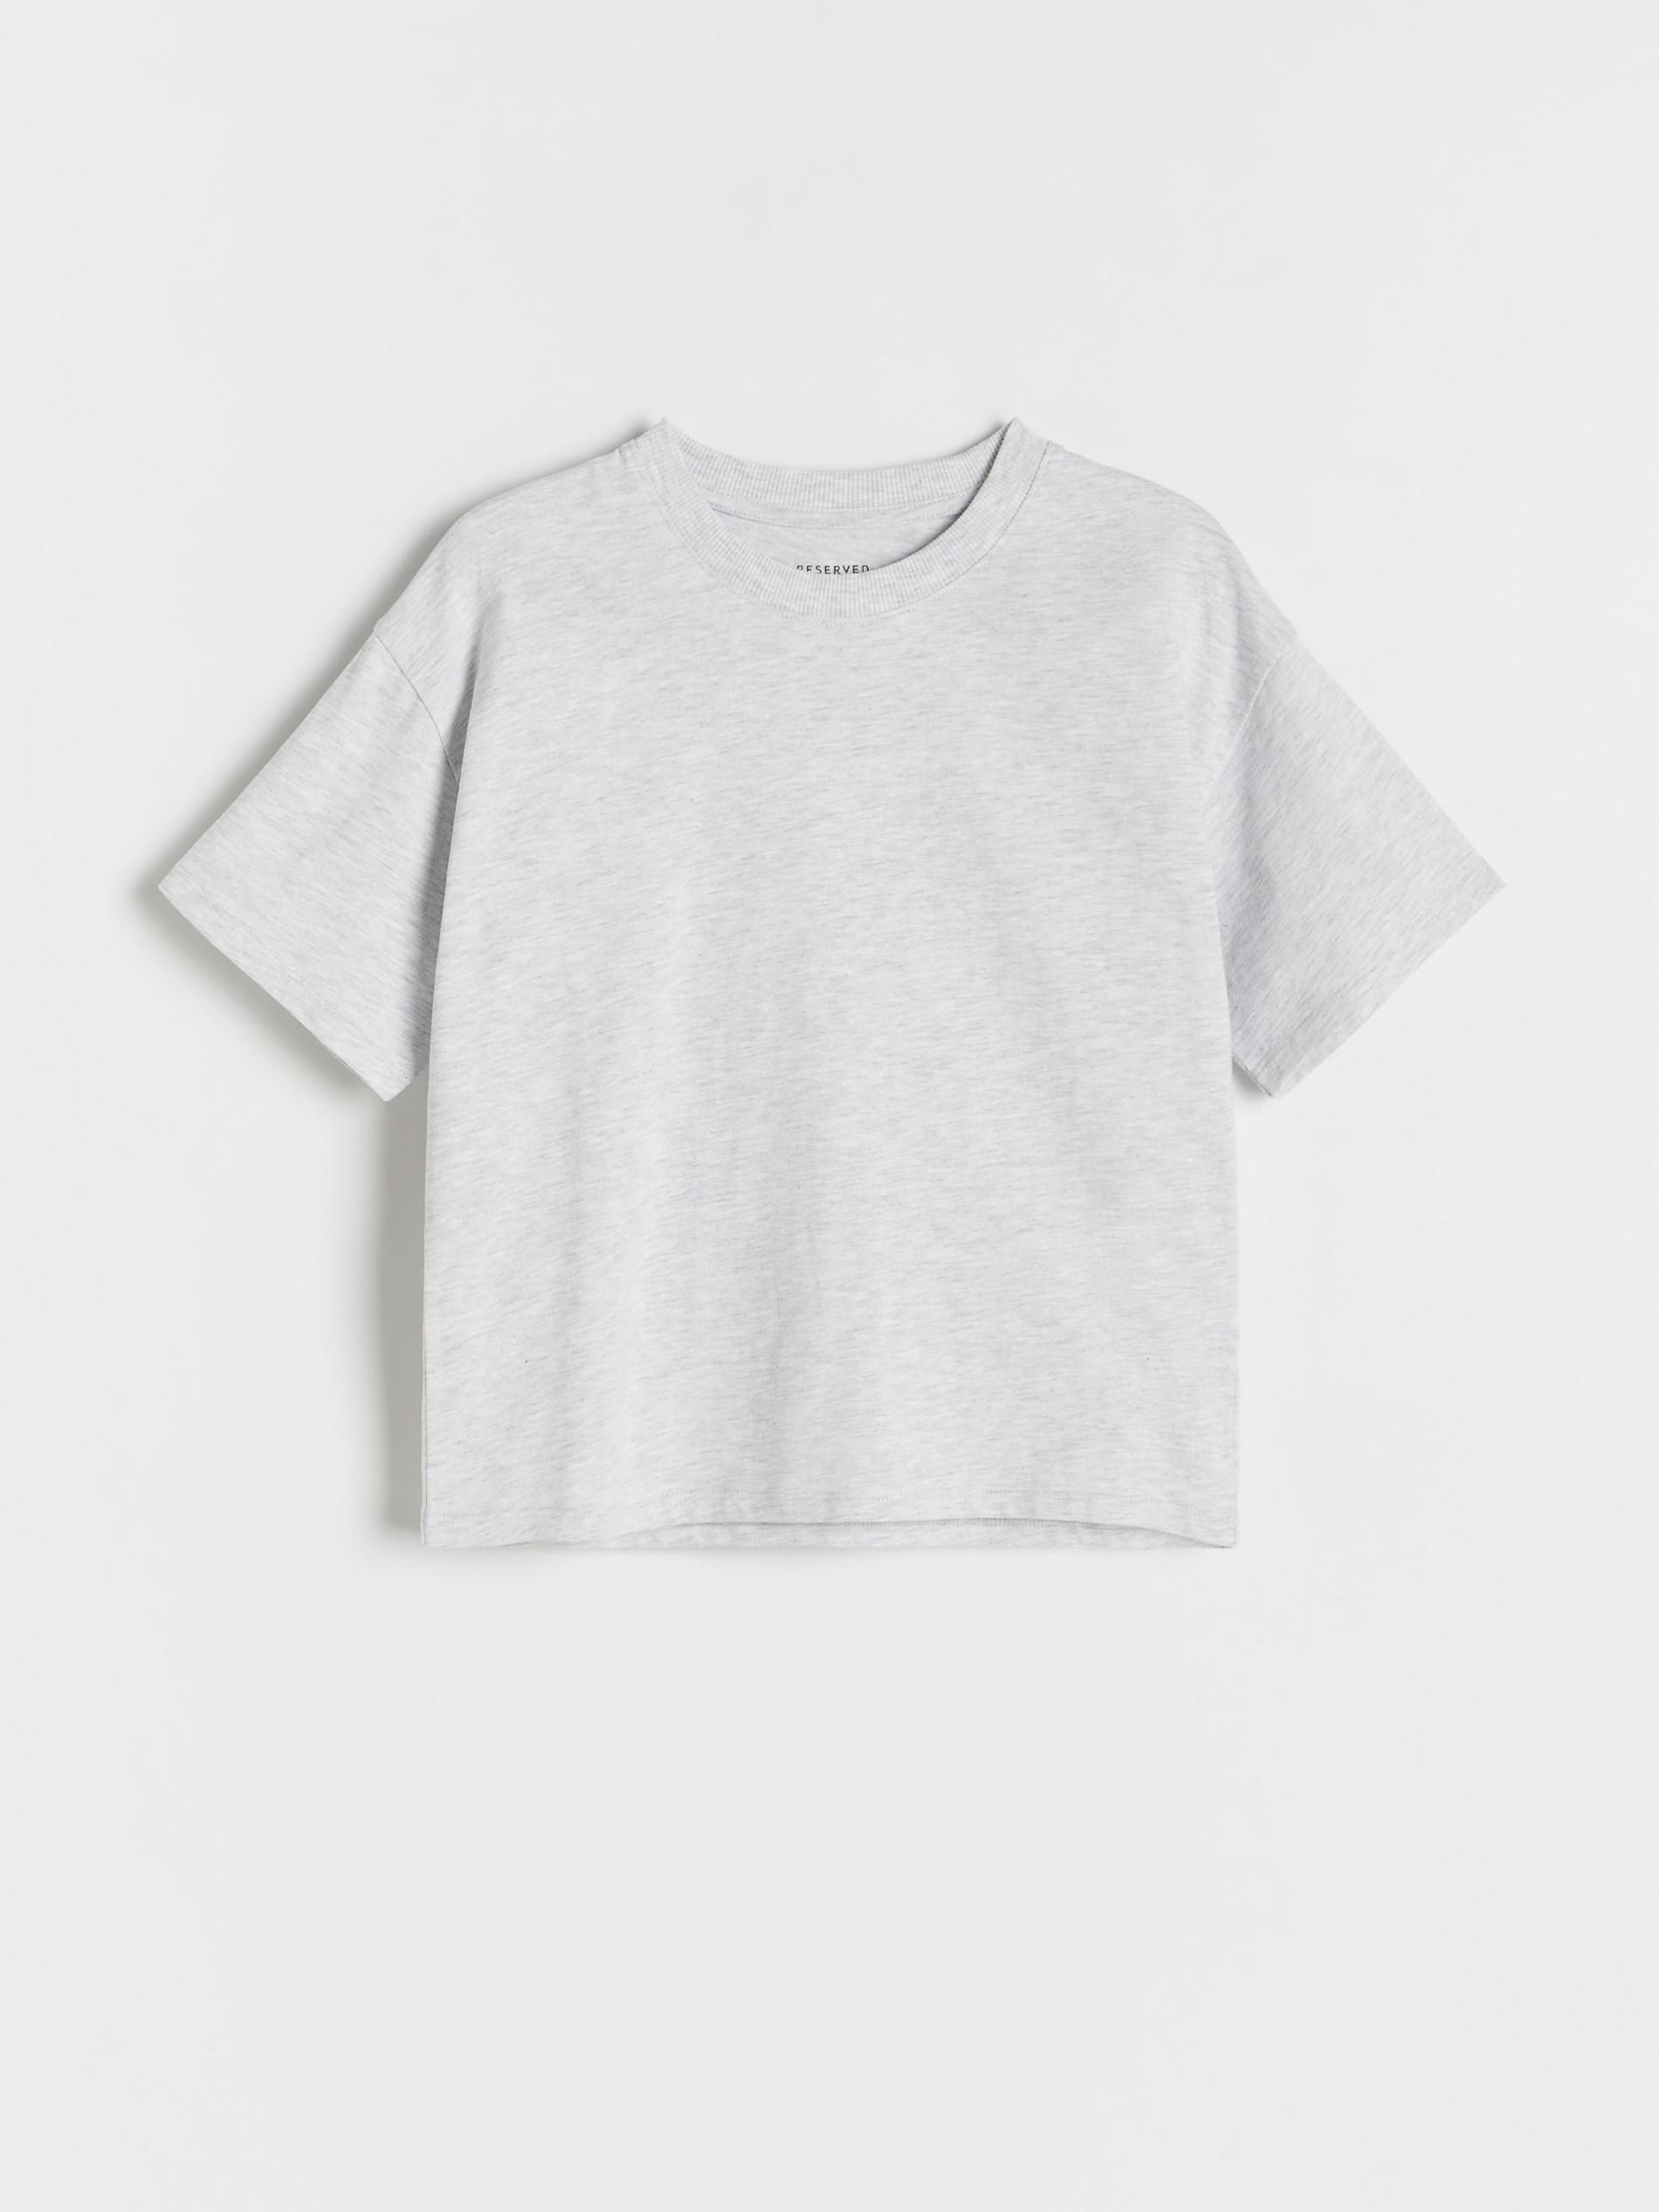 Reserved - White Cotton T-Shirt, Kids Girls